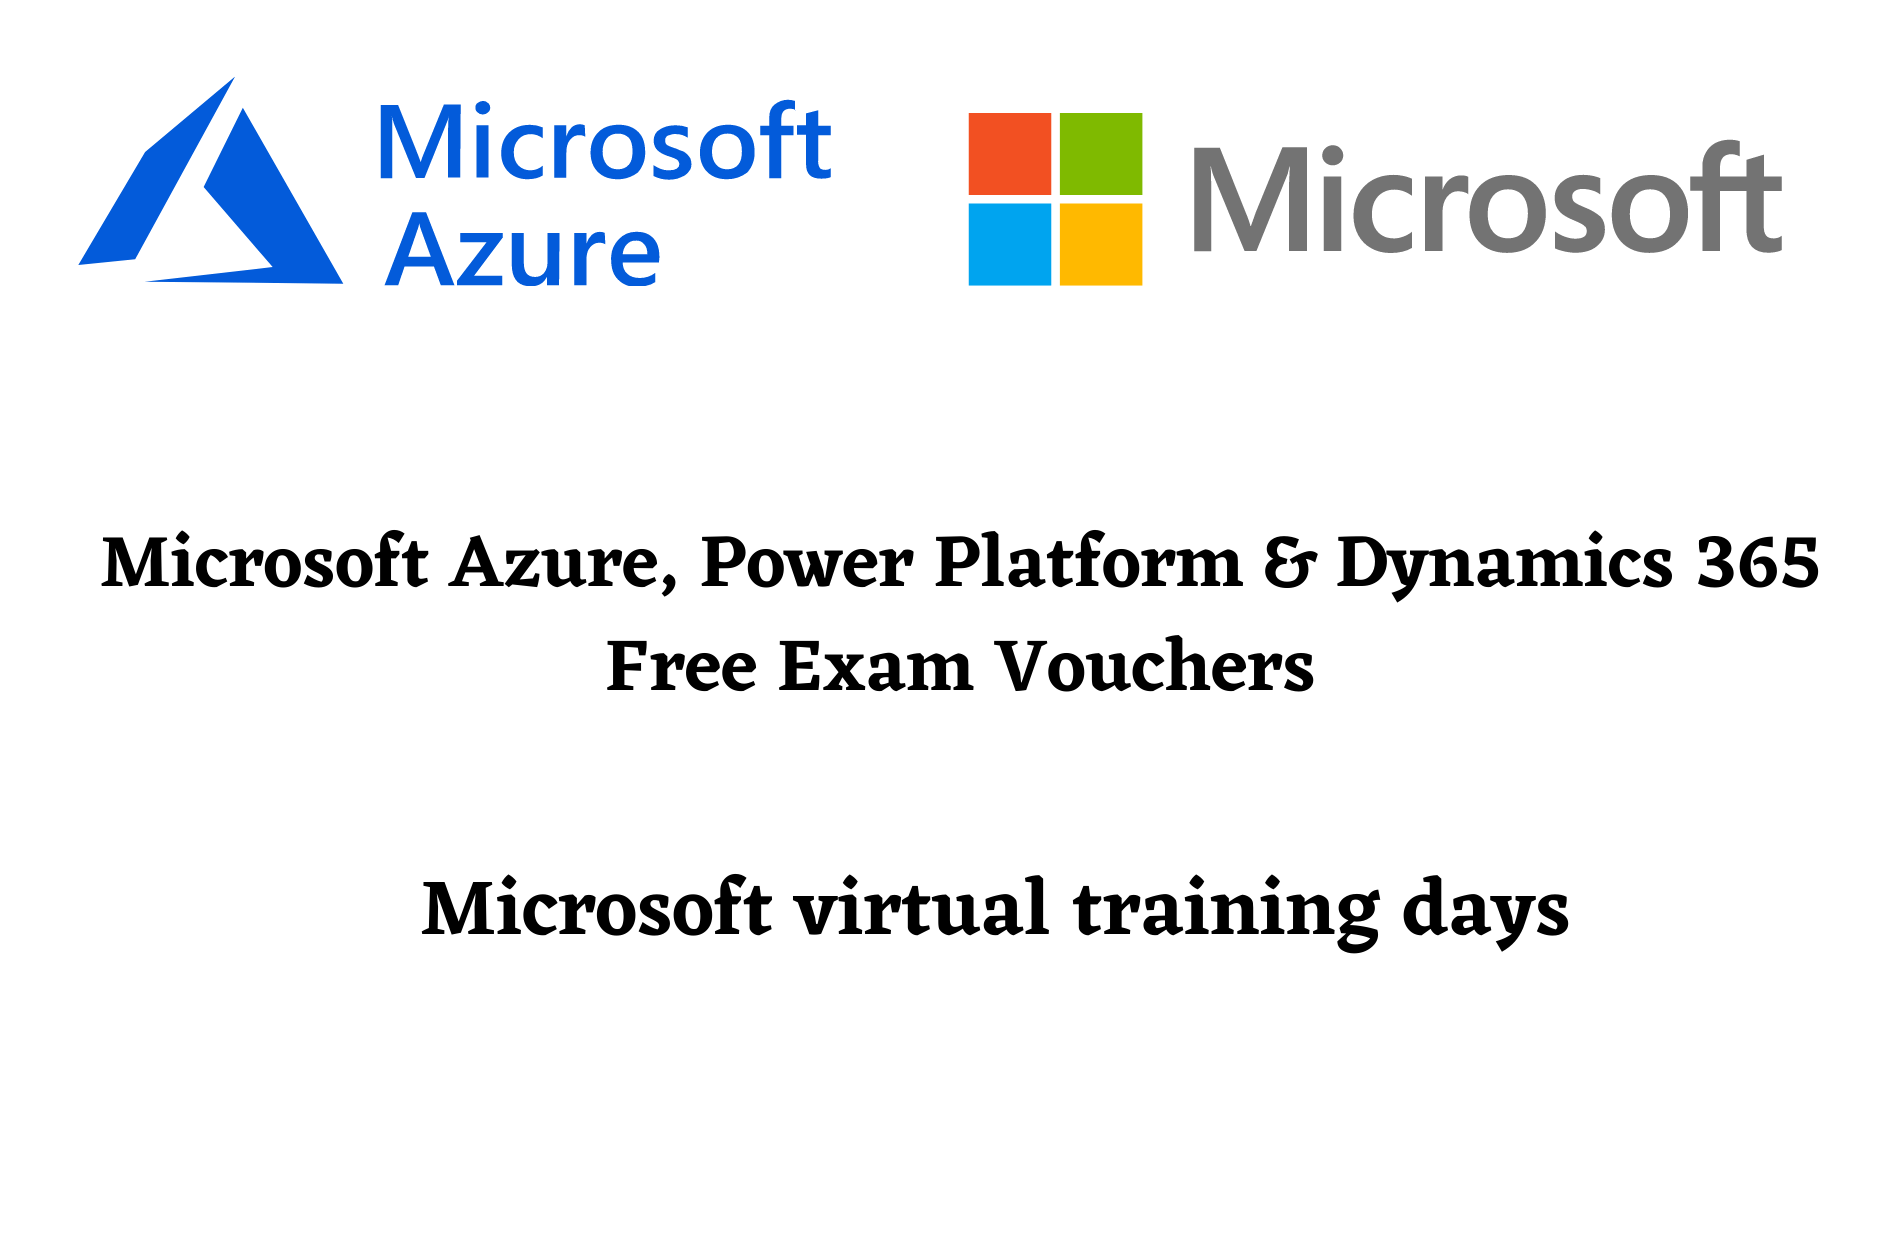 Microsoft virtual training days